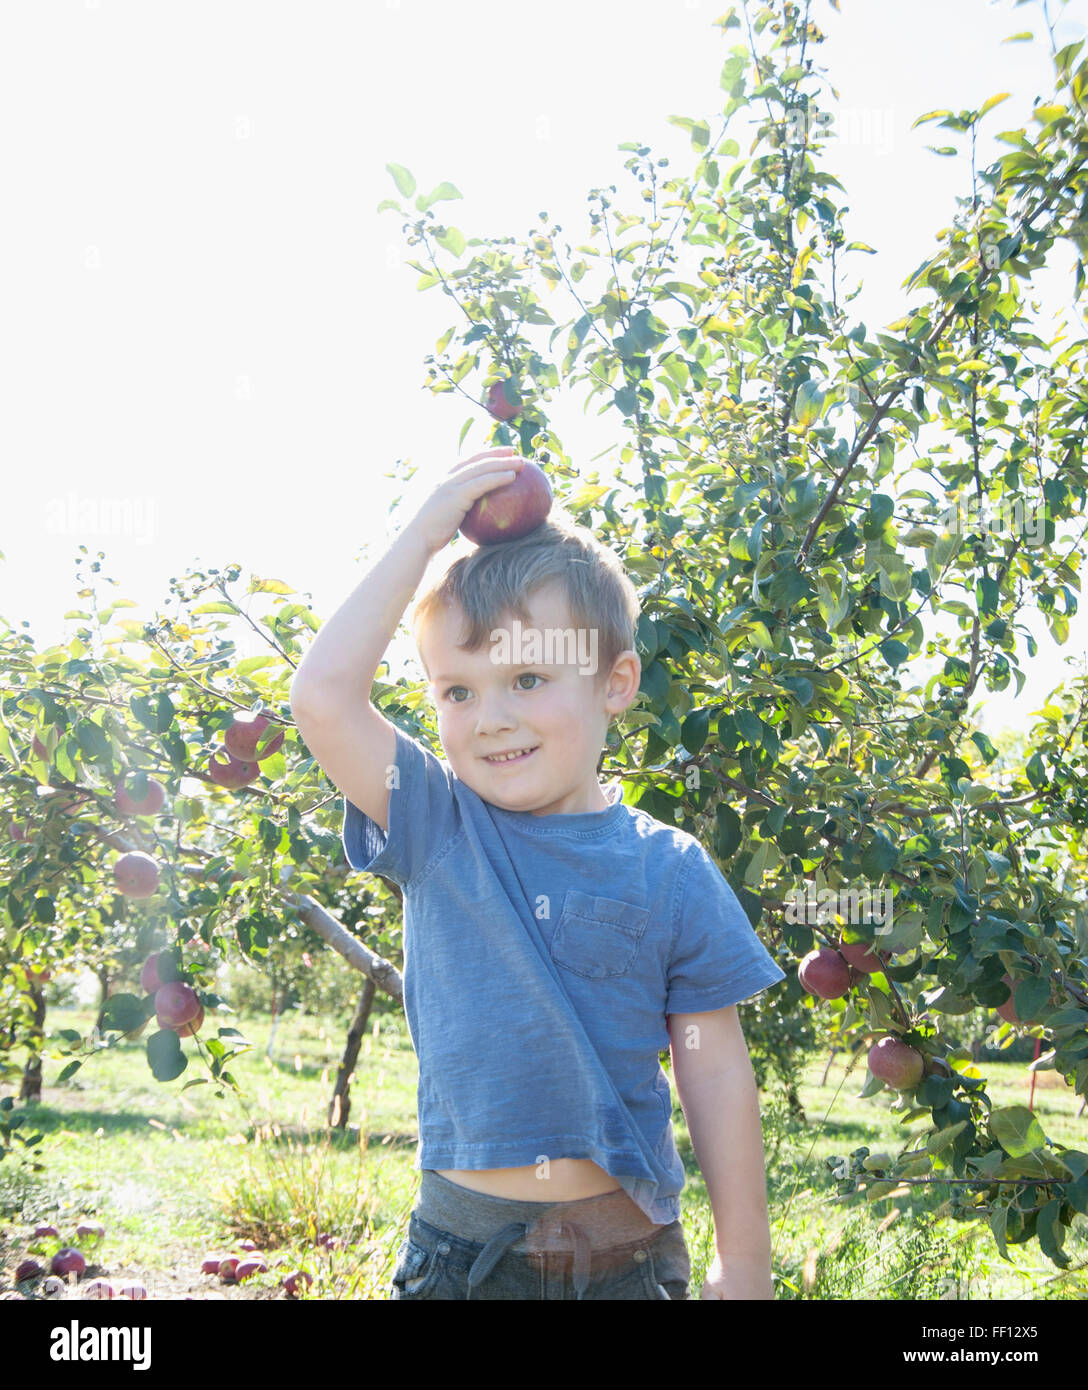 Boy balancing apple on head in orchard Stock Photo